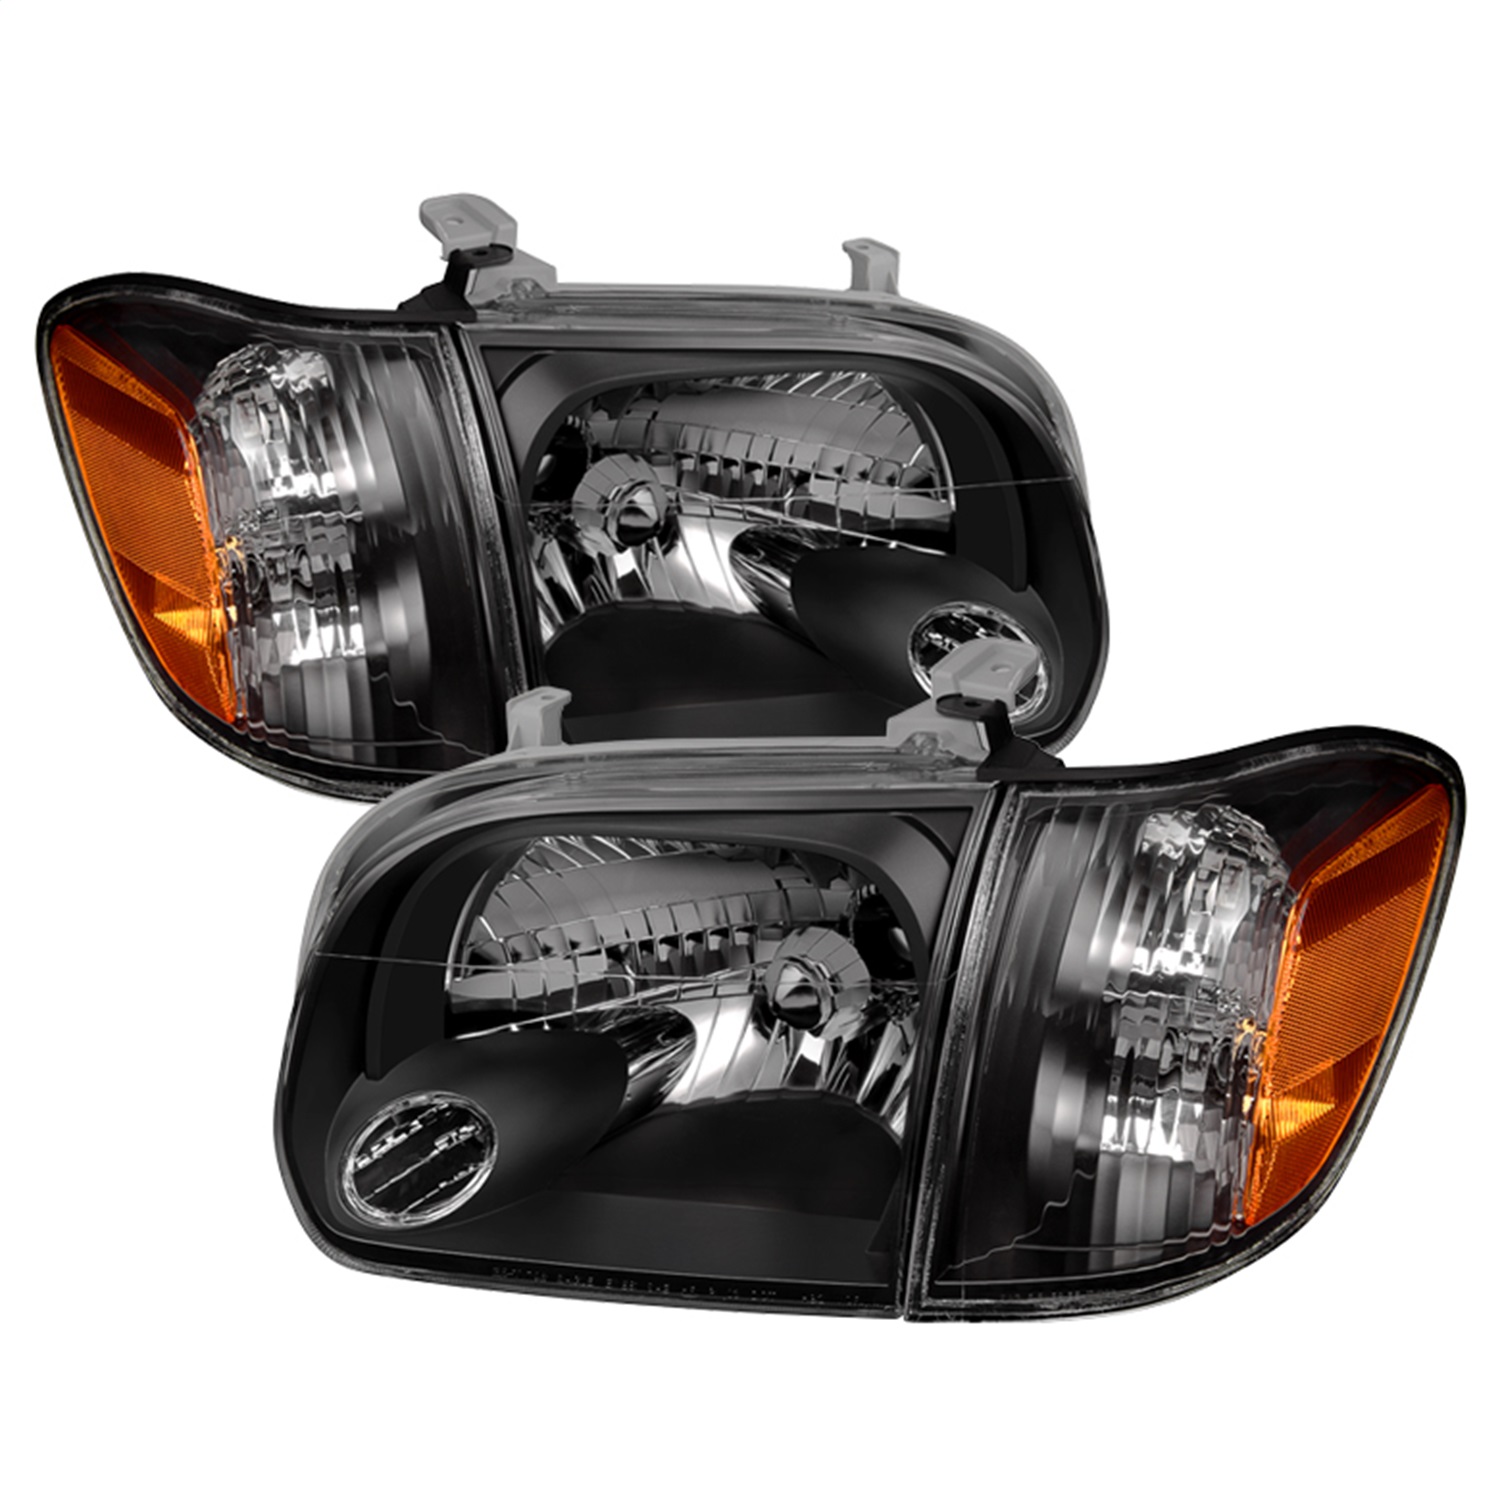 Spyder Auto 9034336 XTune Headlights Fits 05-07 Sequoia Tundra